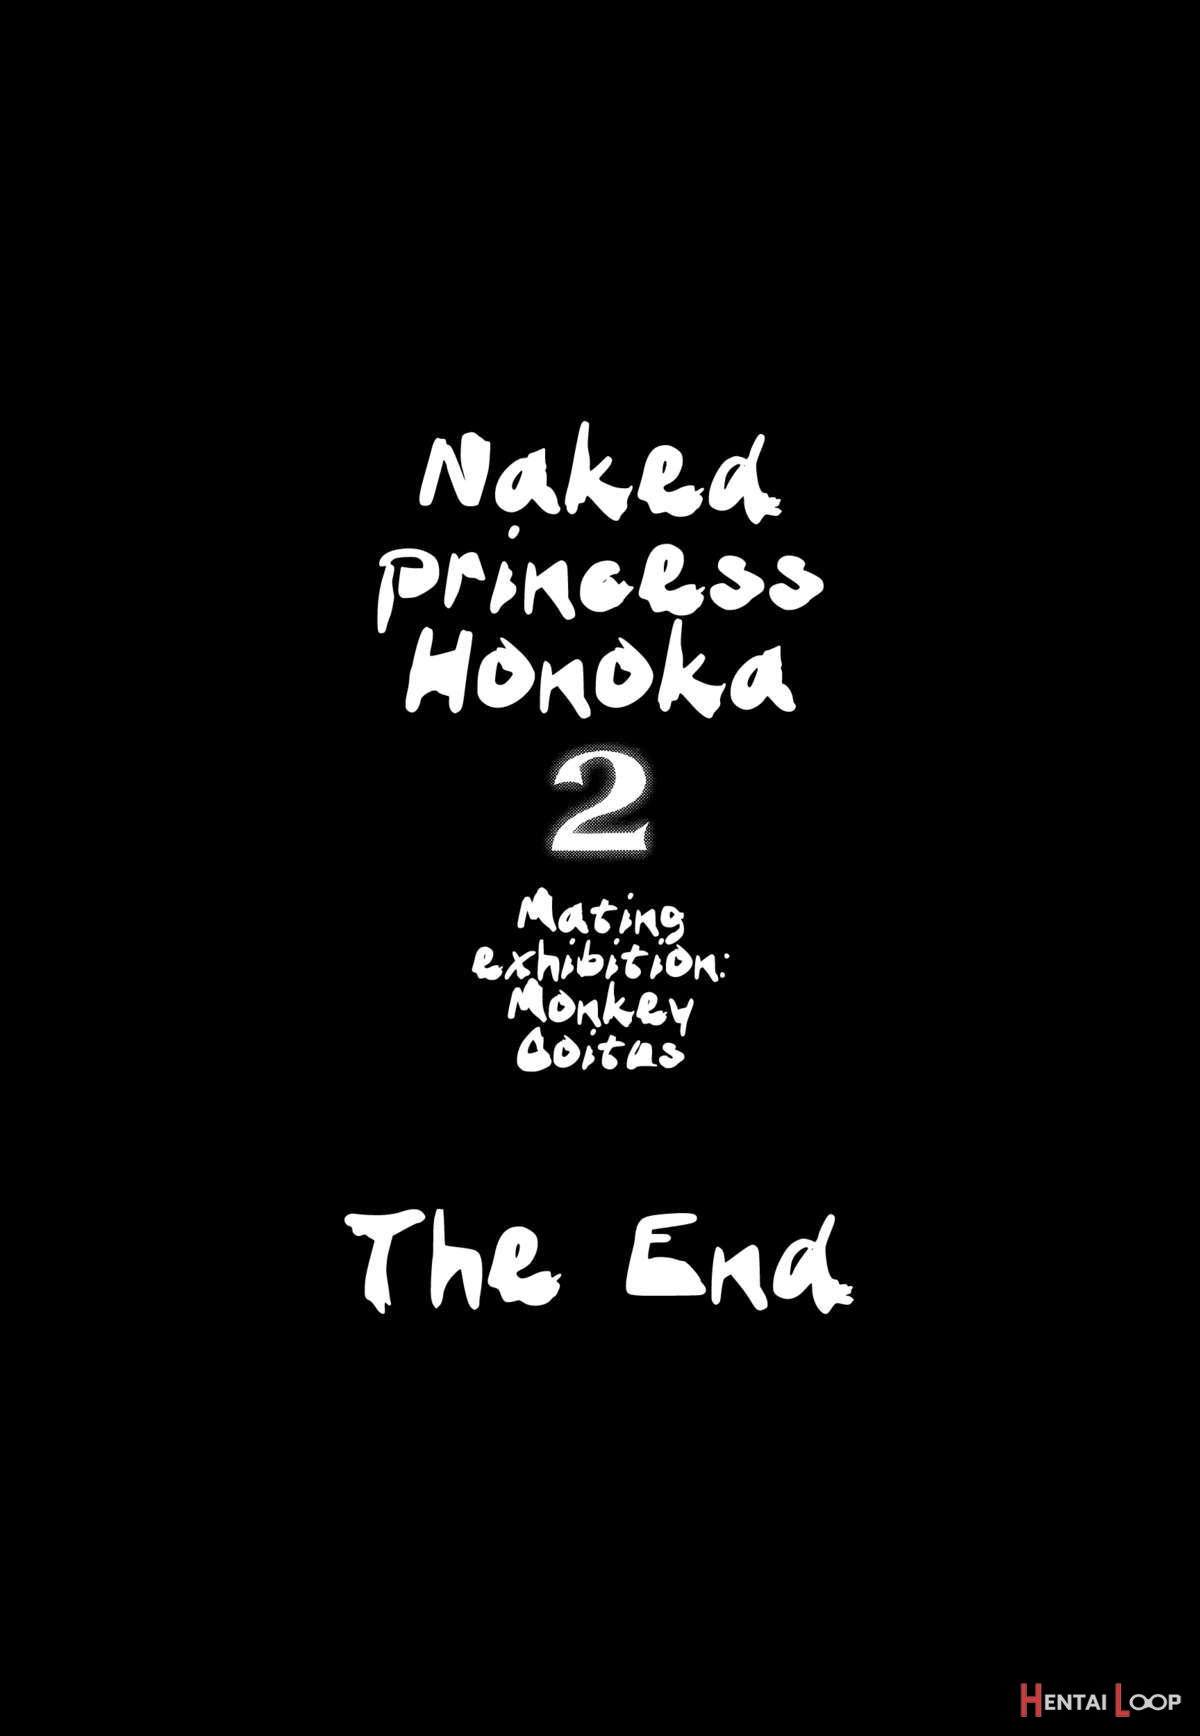 Naked Princess Honoka 2 - Mating Exhibition: Monkey Coitus page 60